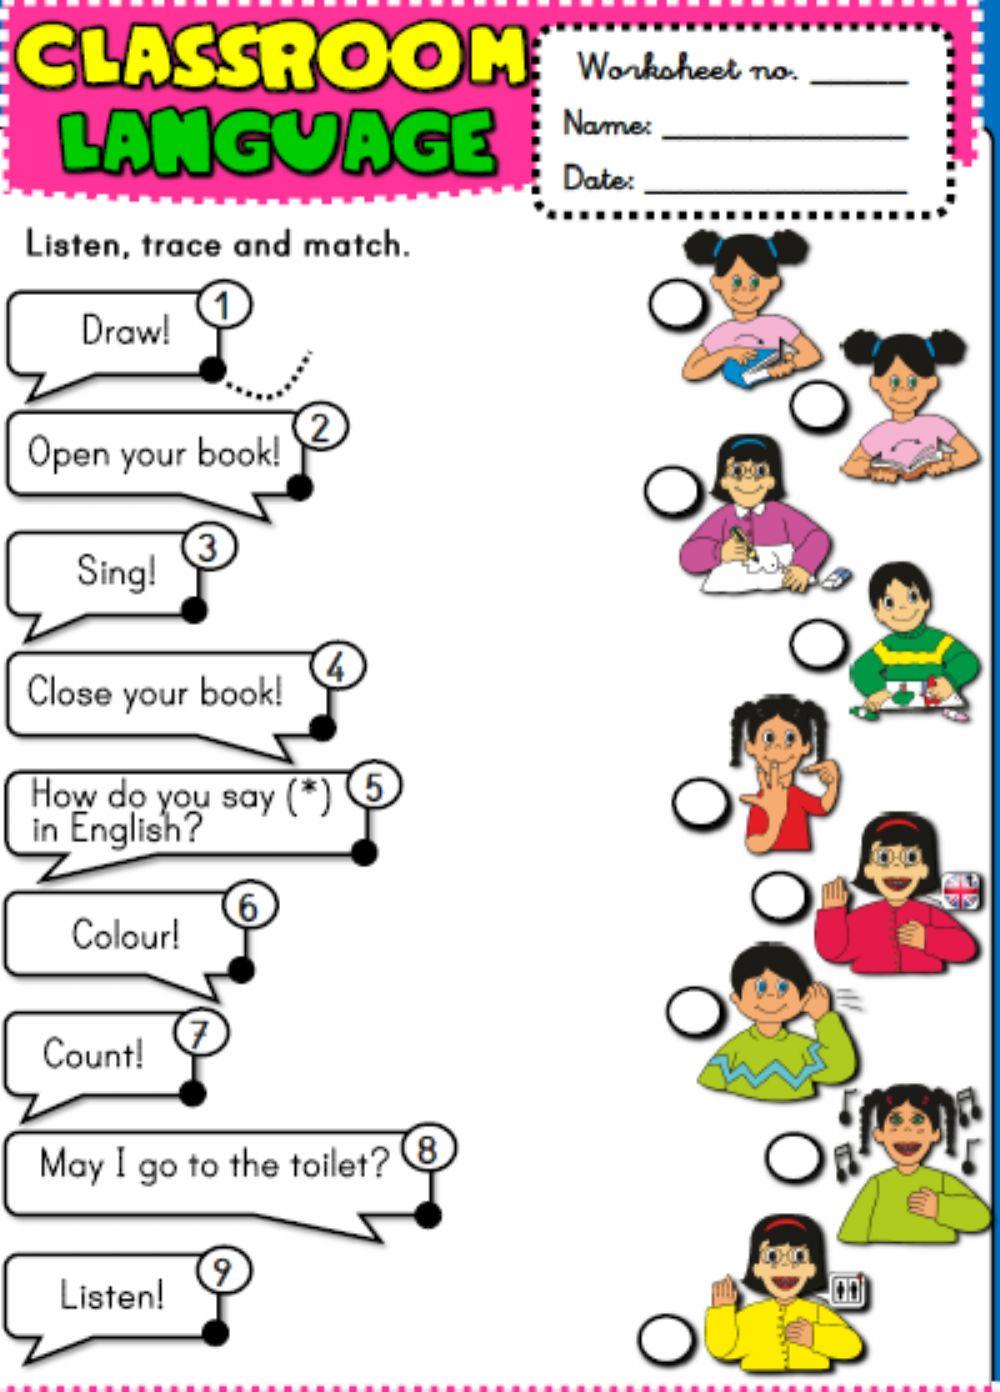 Classroom Language2